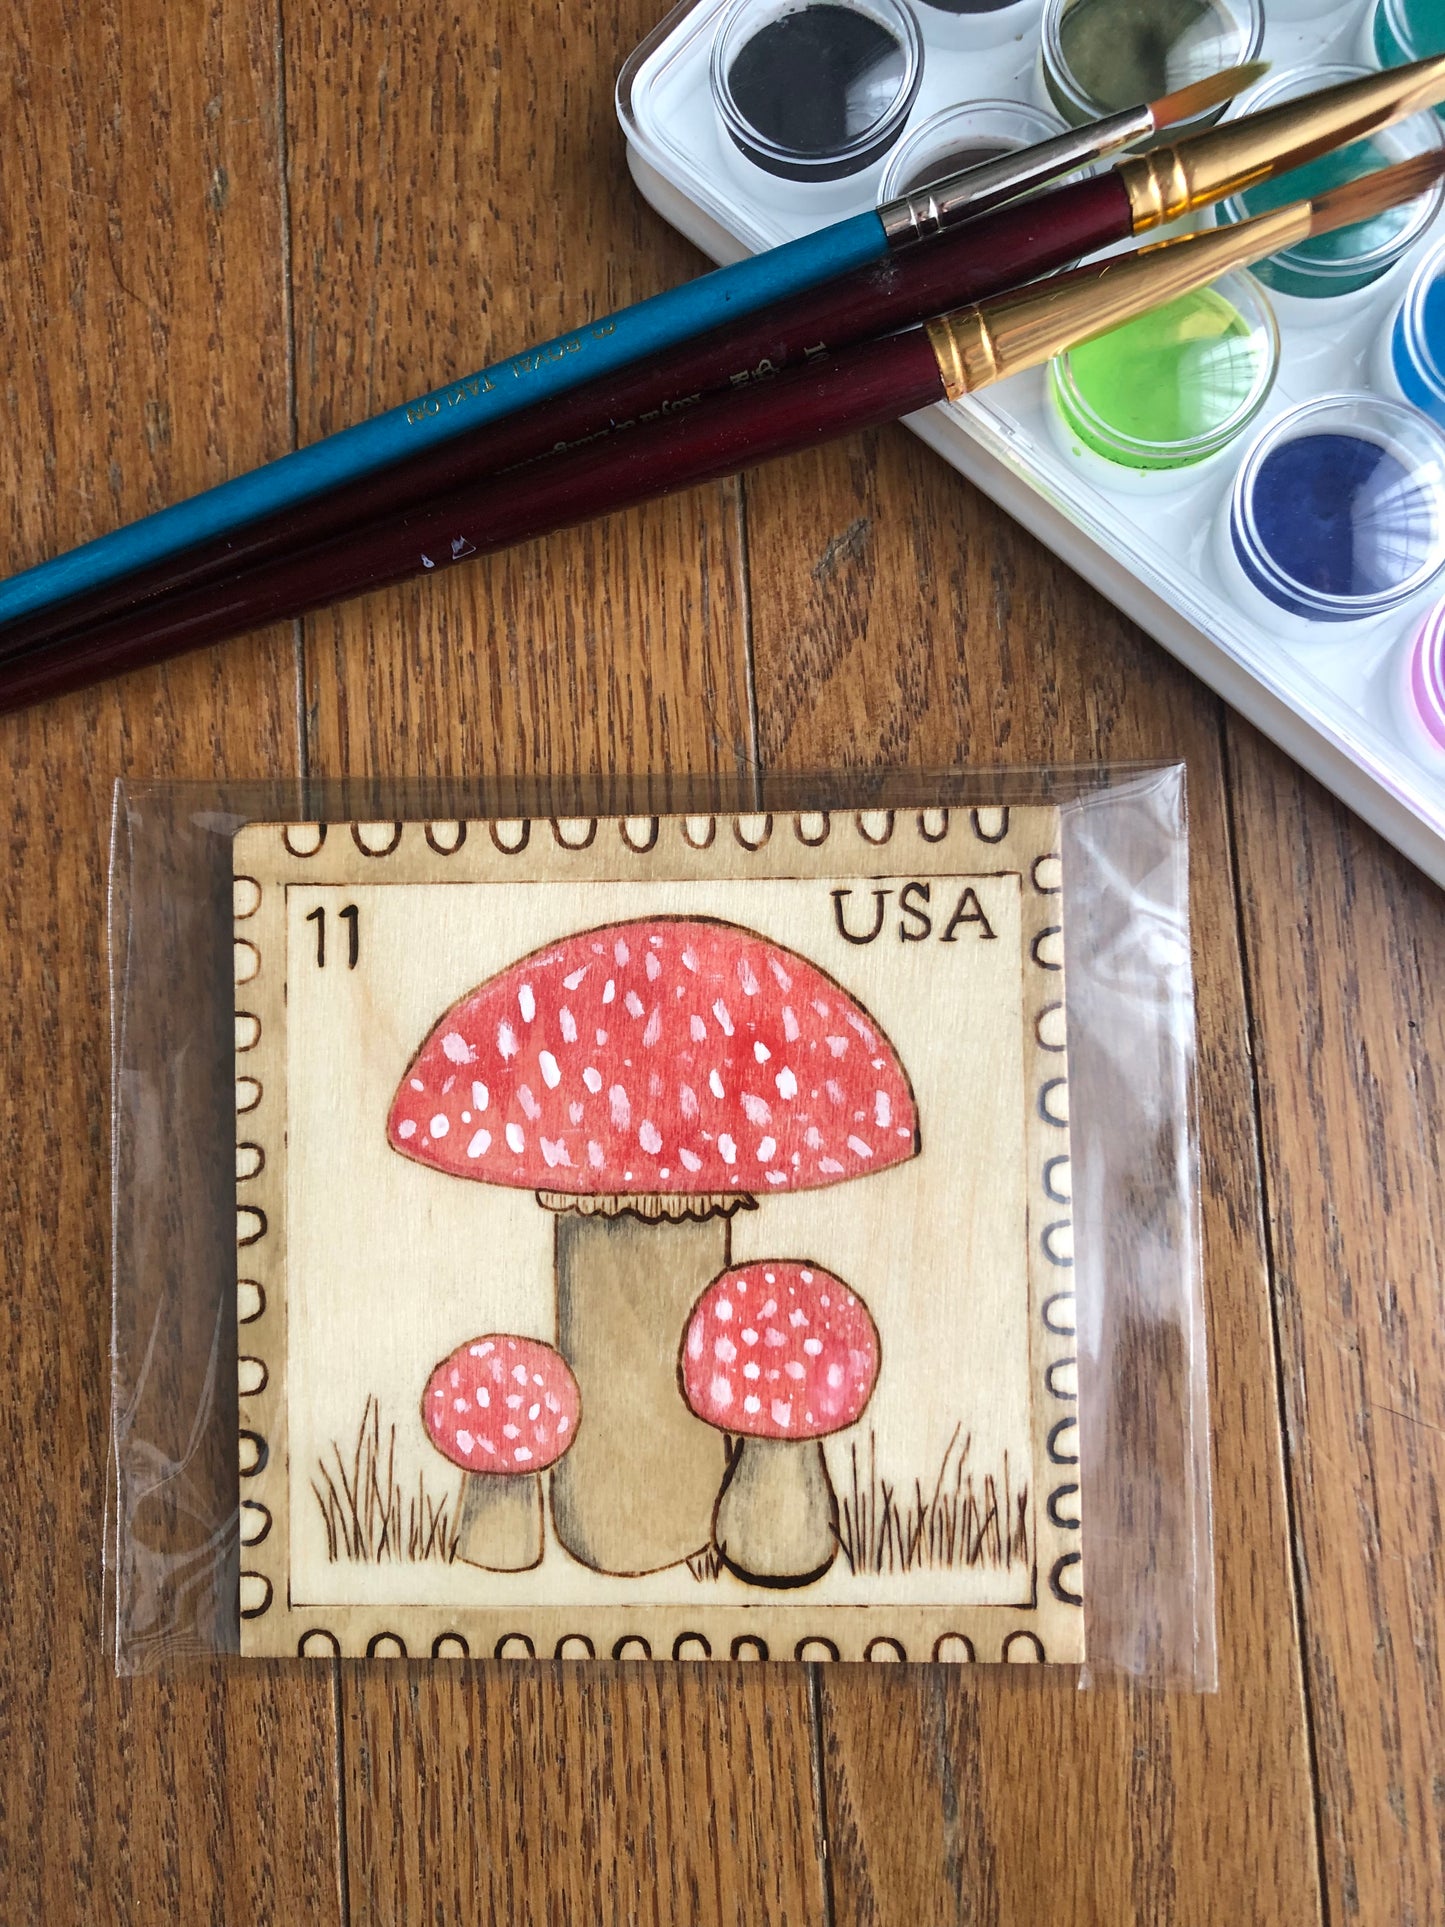 Mushroom Stamp